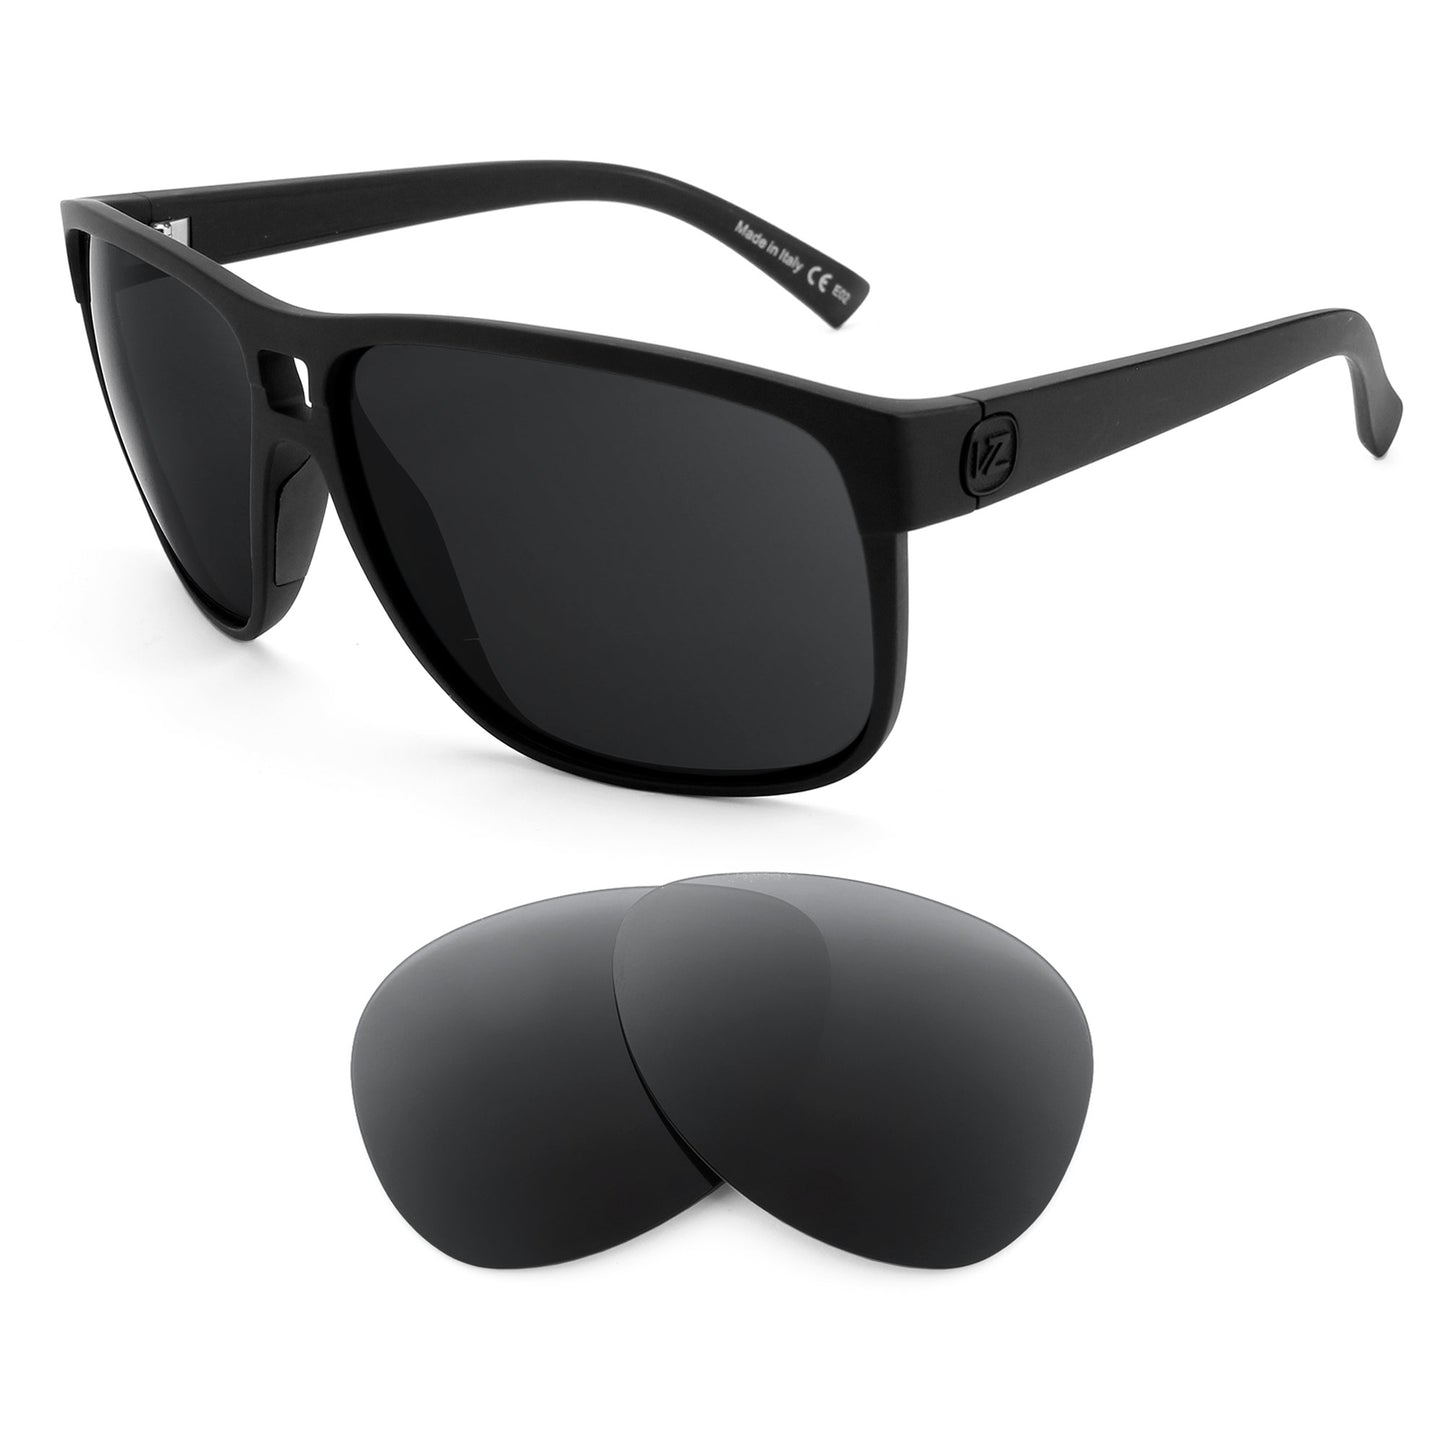 VonZipper Blotto sunglasses with replacement lenses